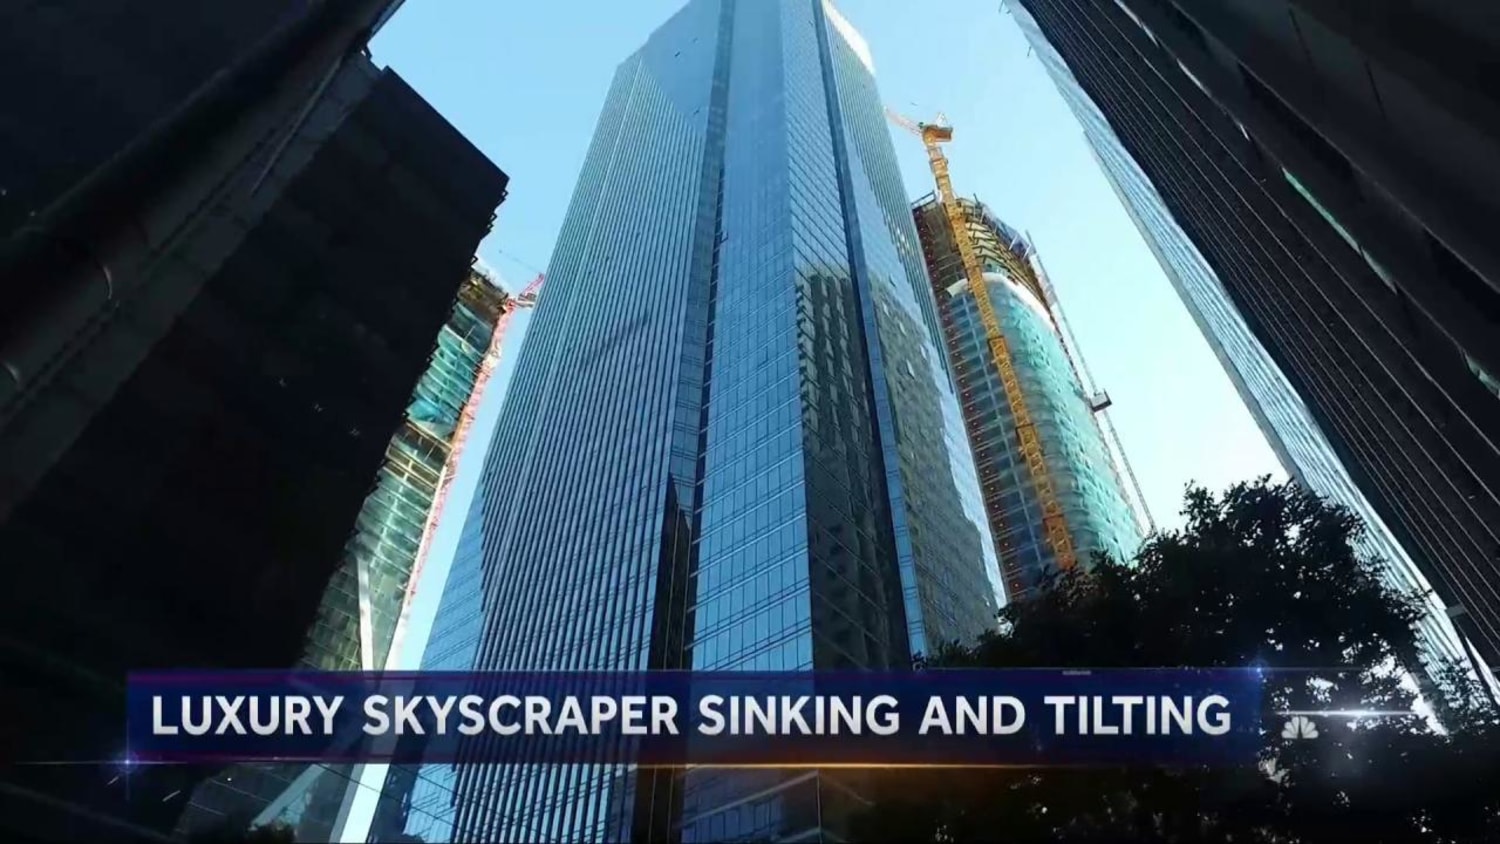 Fake Hills Linear Tower - The Skyscraper Center